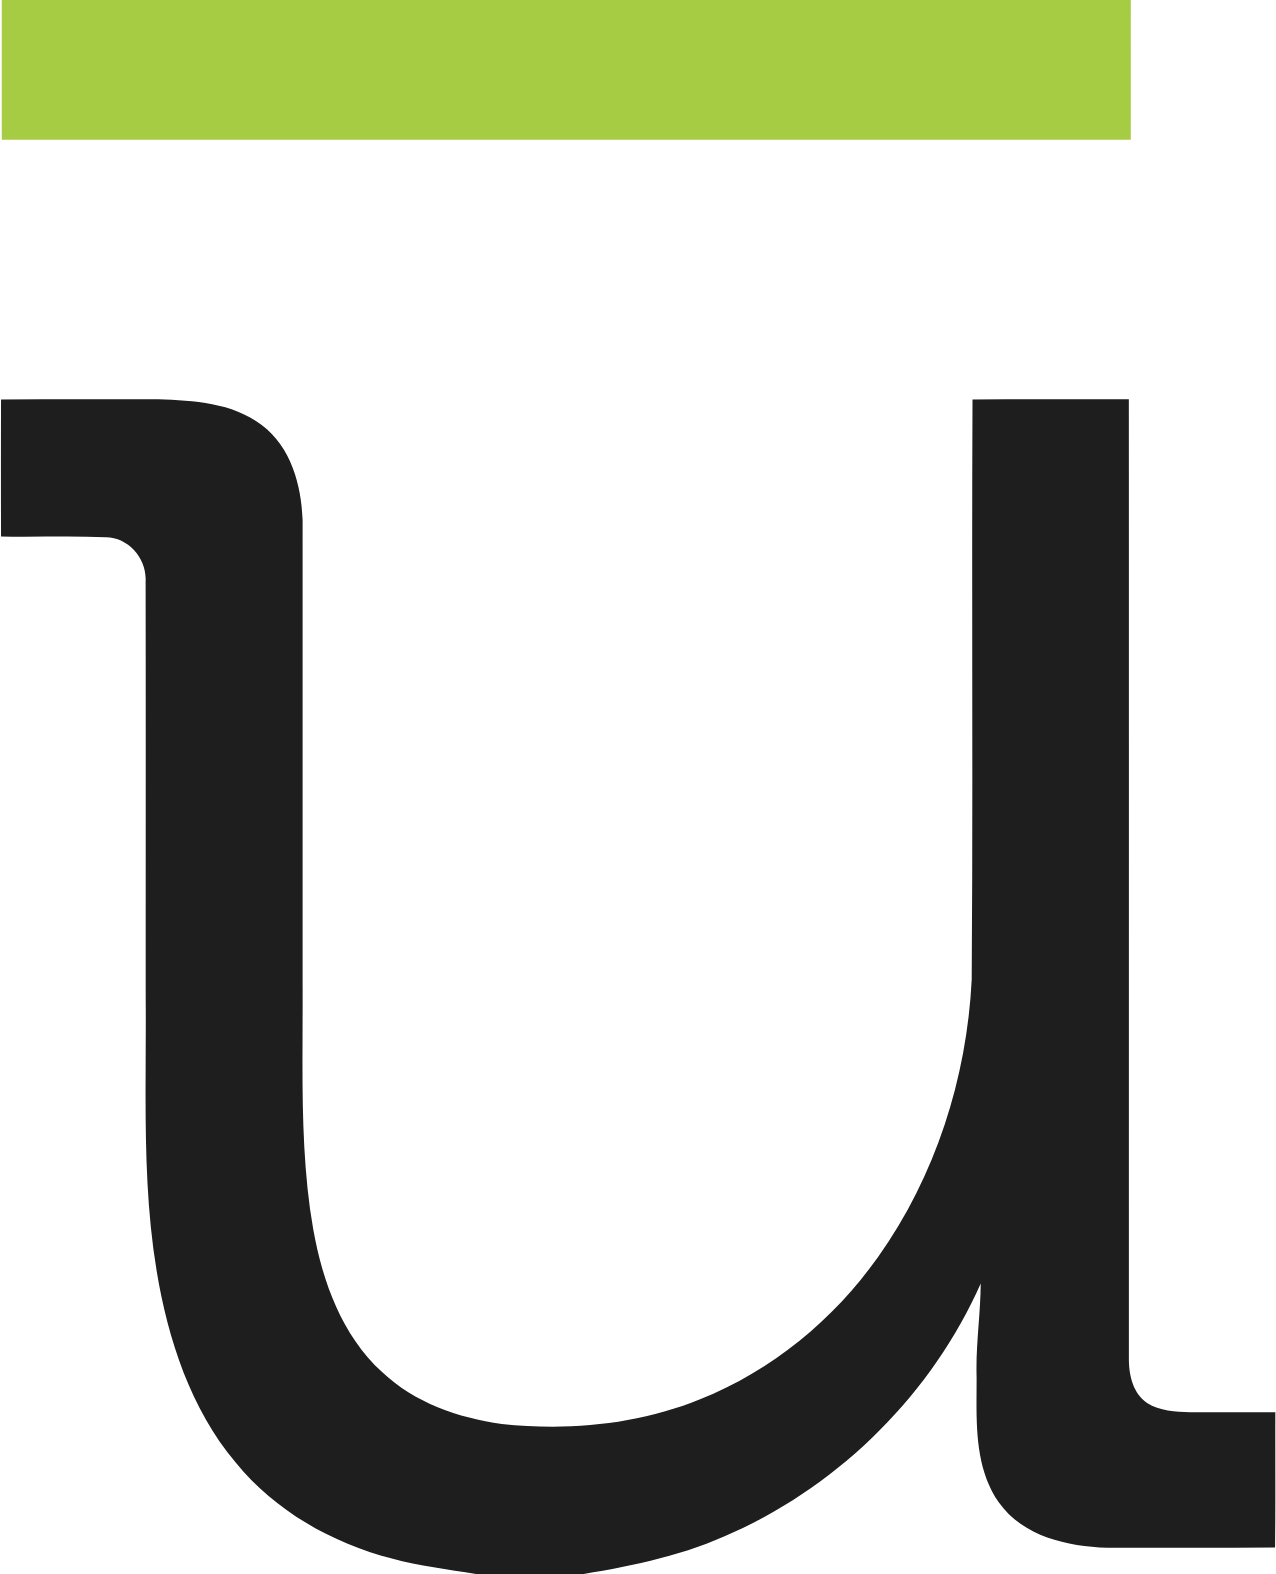 Inuvo logo (transparent PNG)